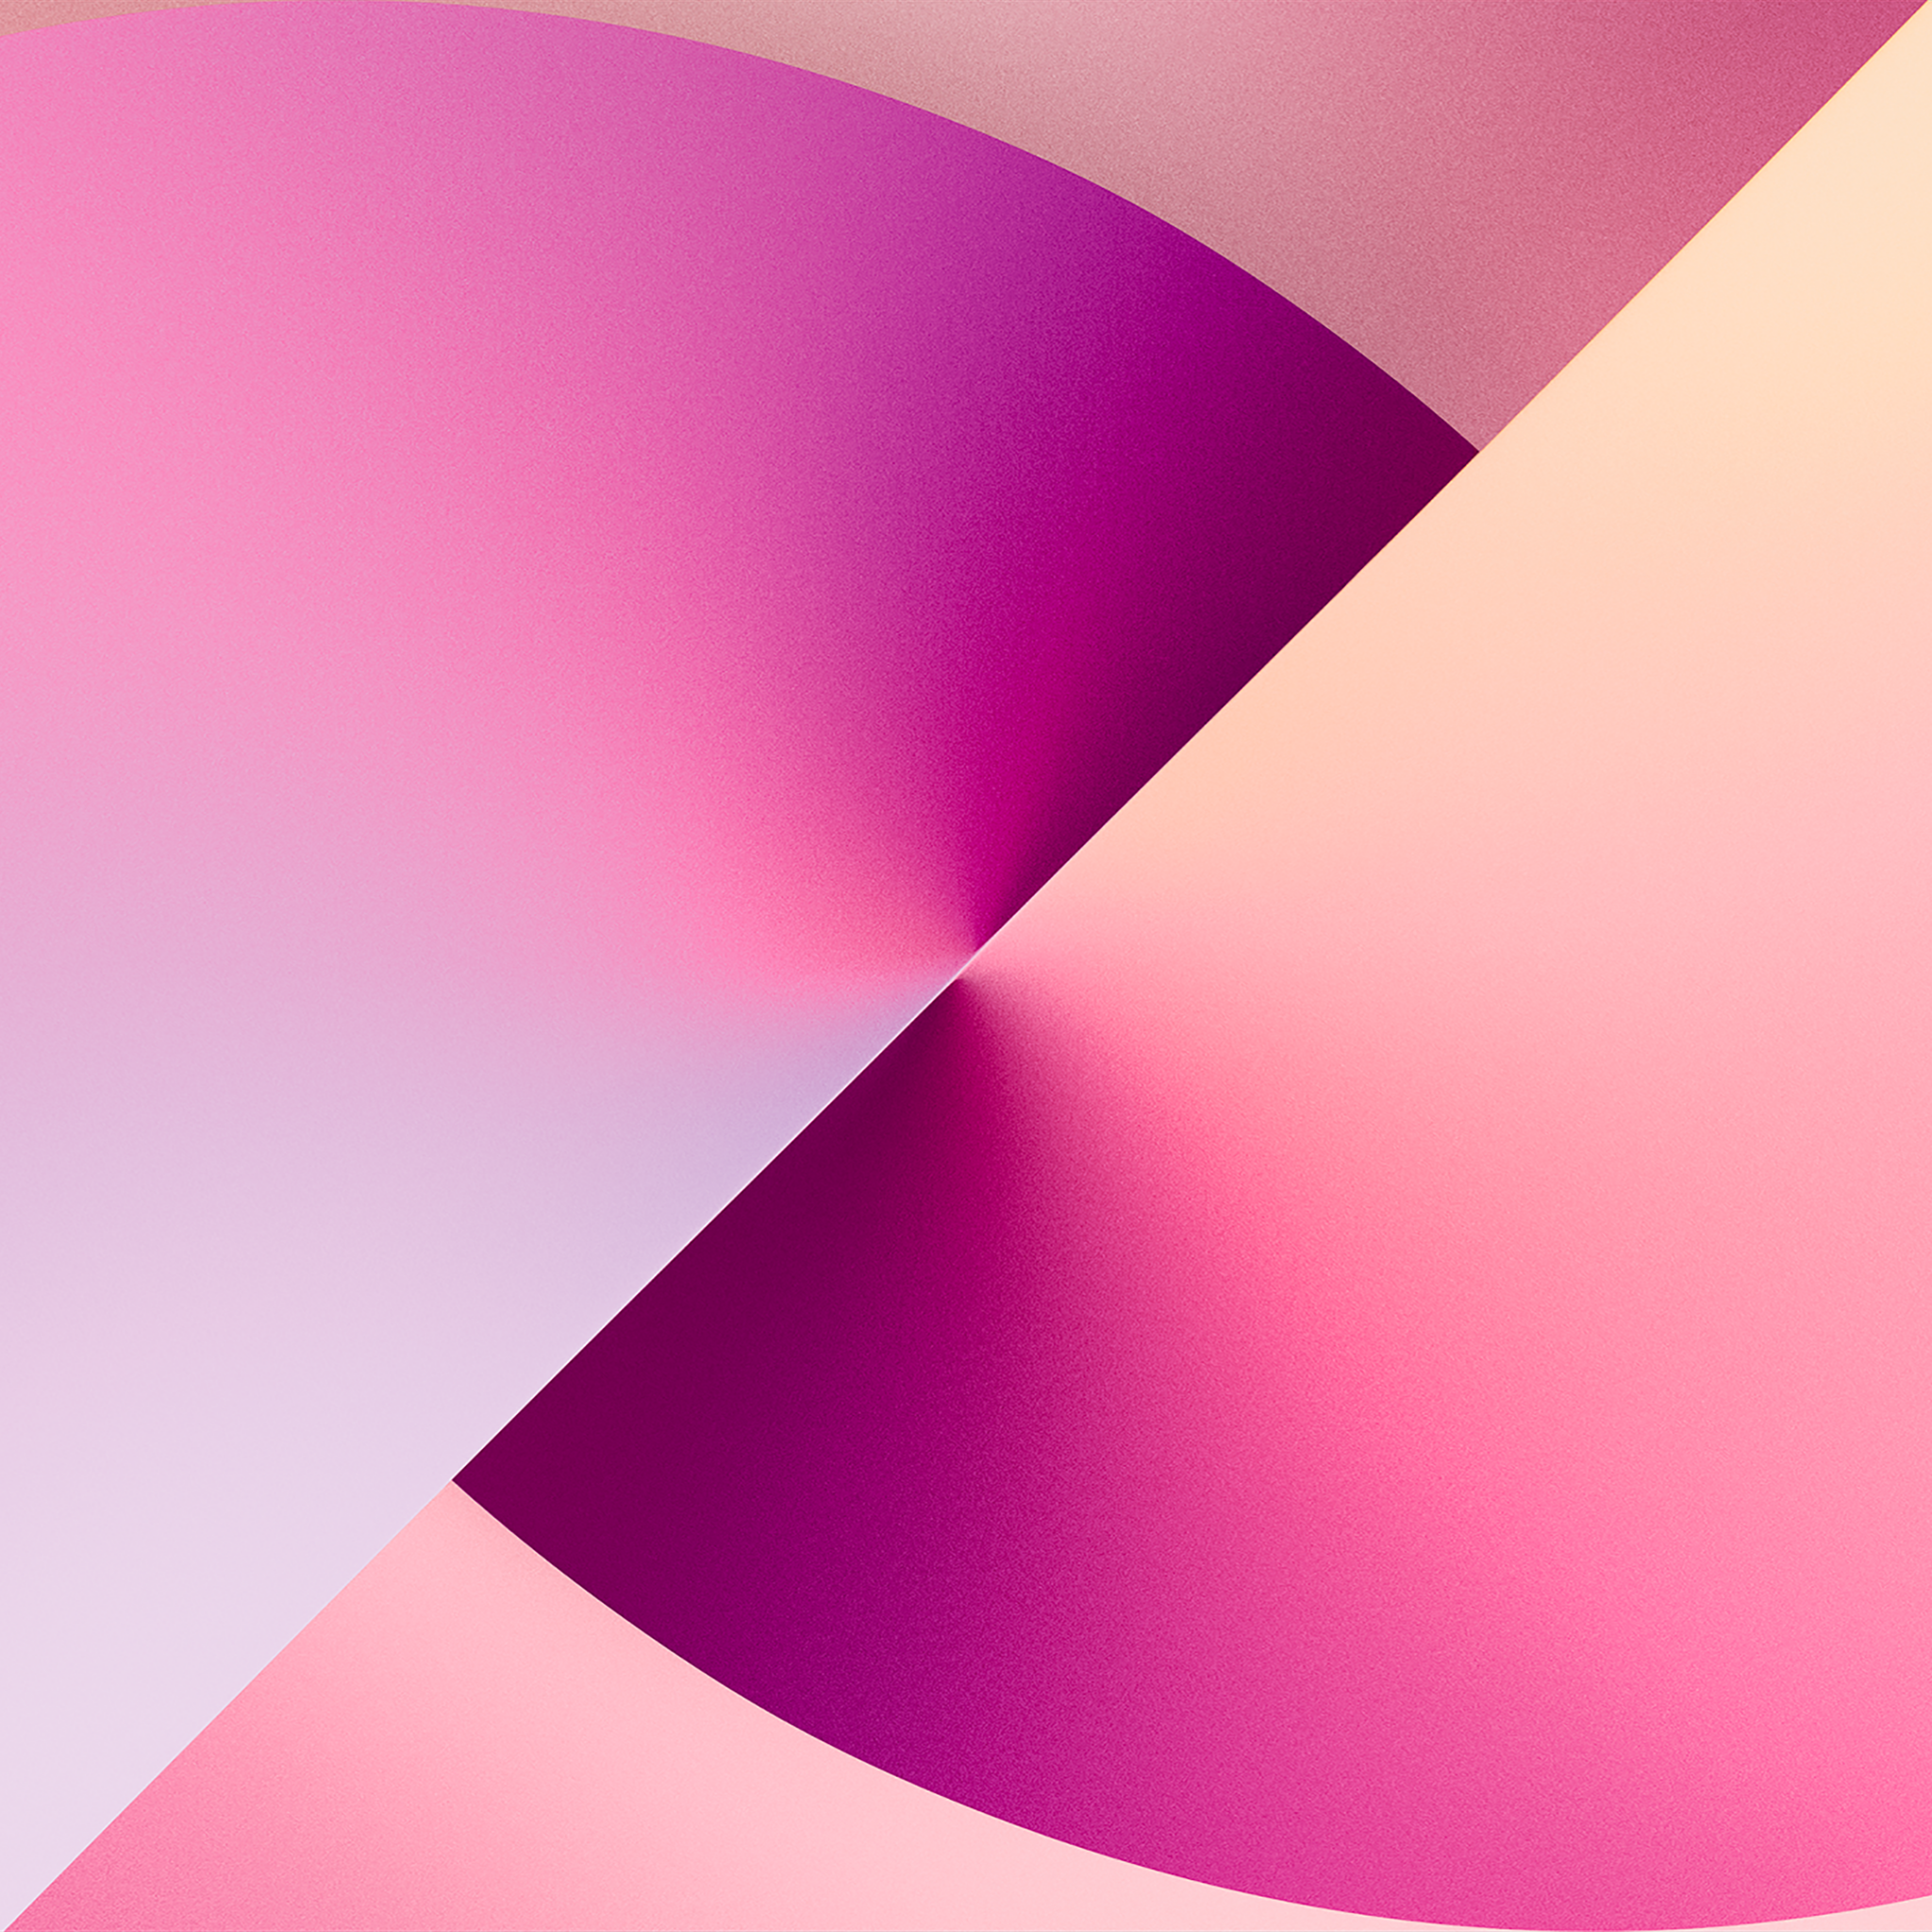 Light Pink | Pink Aesthetic Wallpaper Download | MobCup